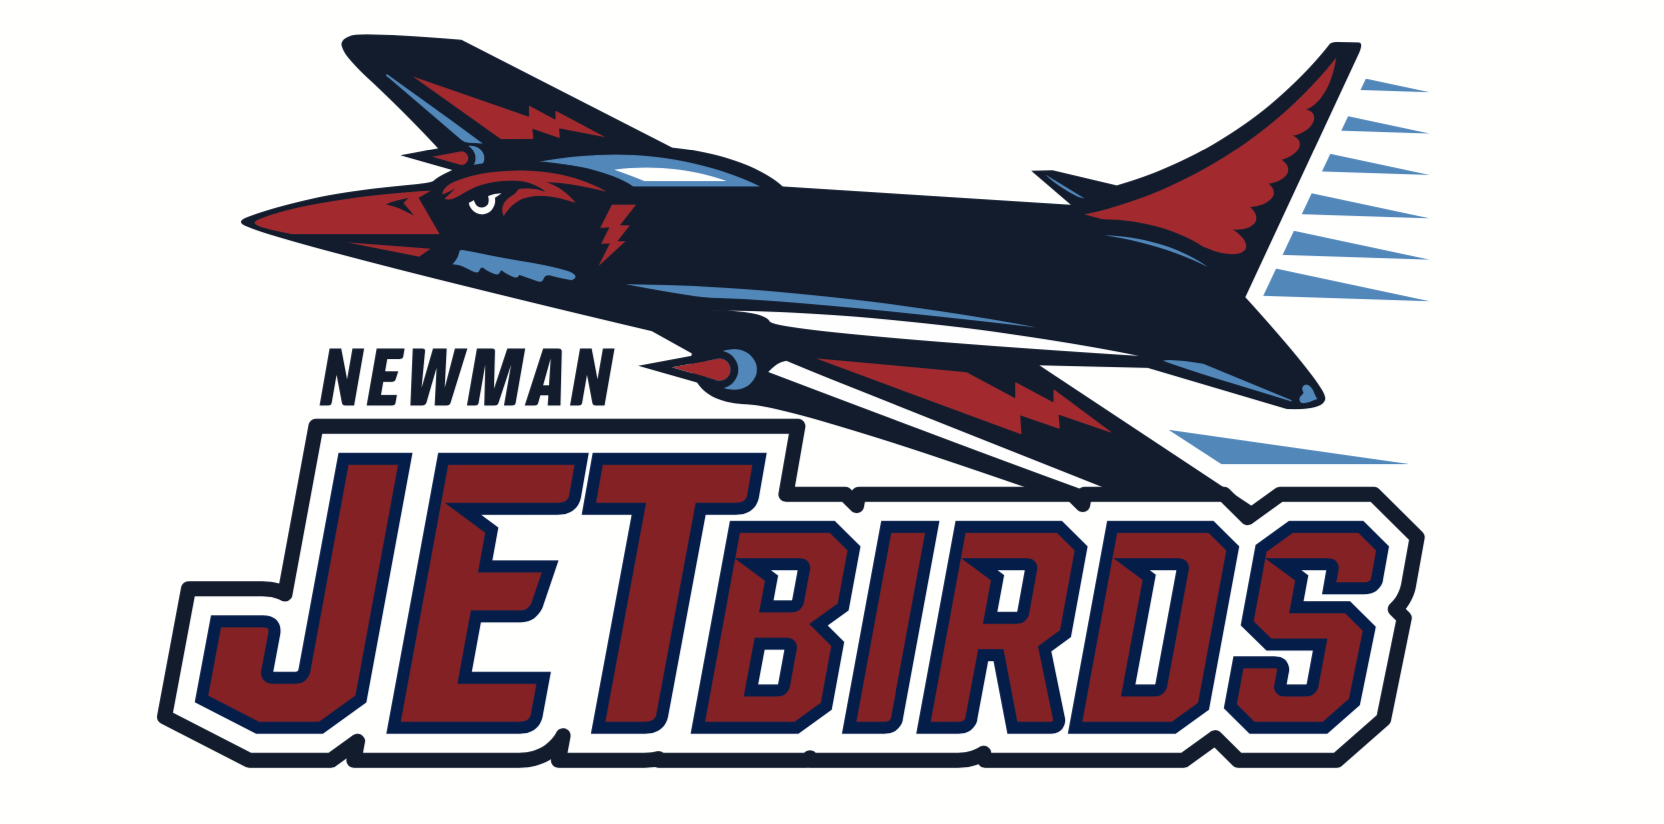 Newman Athletics considering new logo, mascot